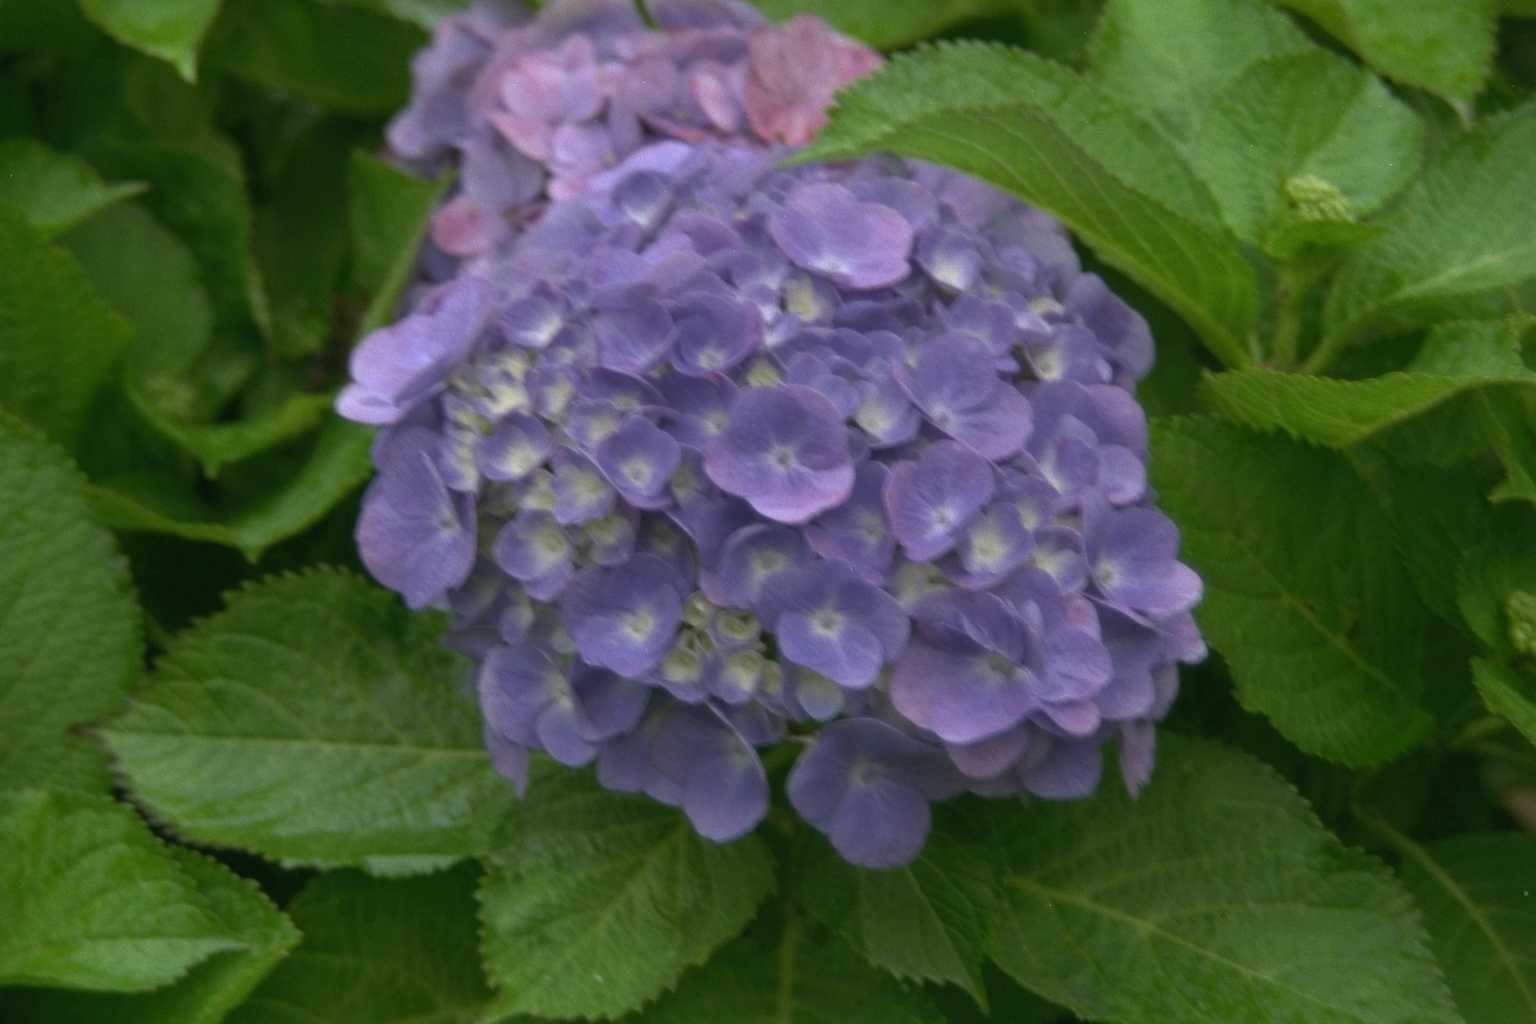 Hydrangea macrophylla ‘Nikko Blue’